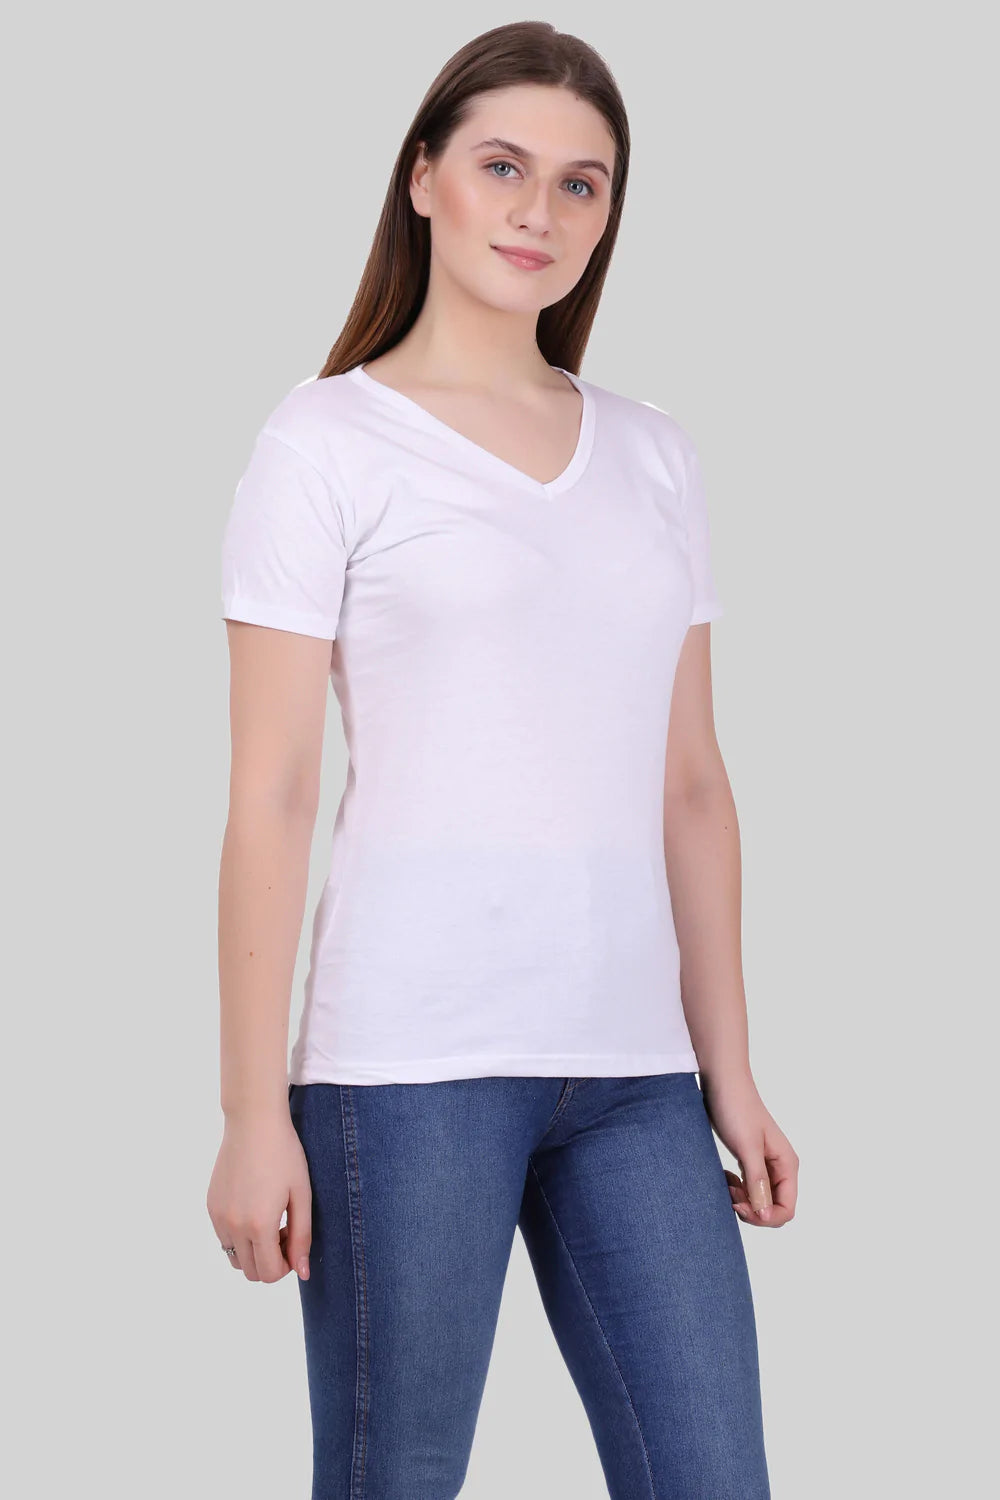 Women's Cotton Plain V Neck Half Sleeve White Color T-Shirt